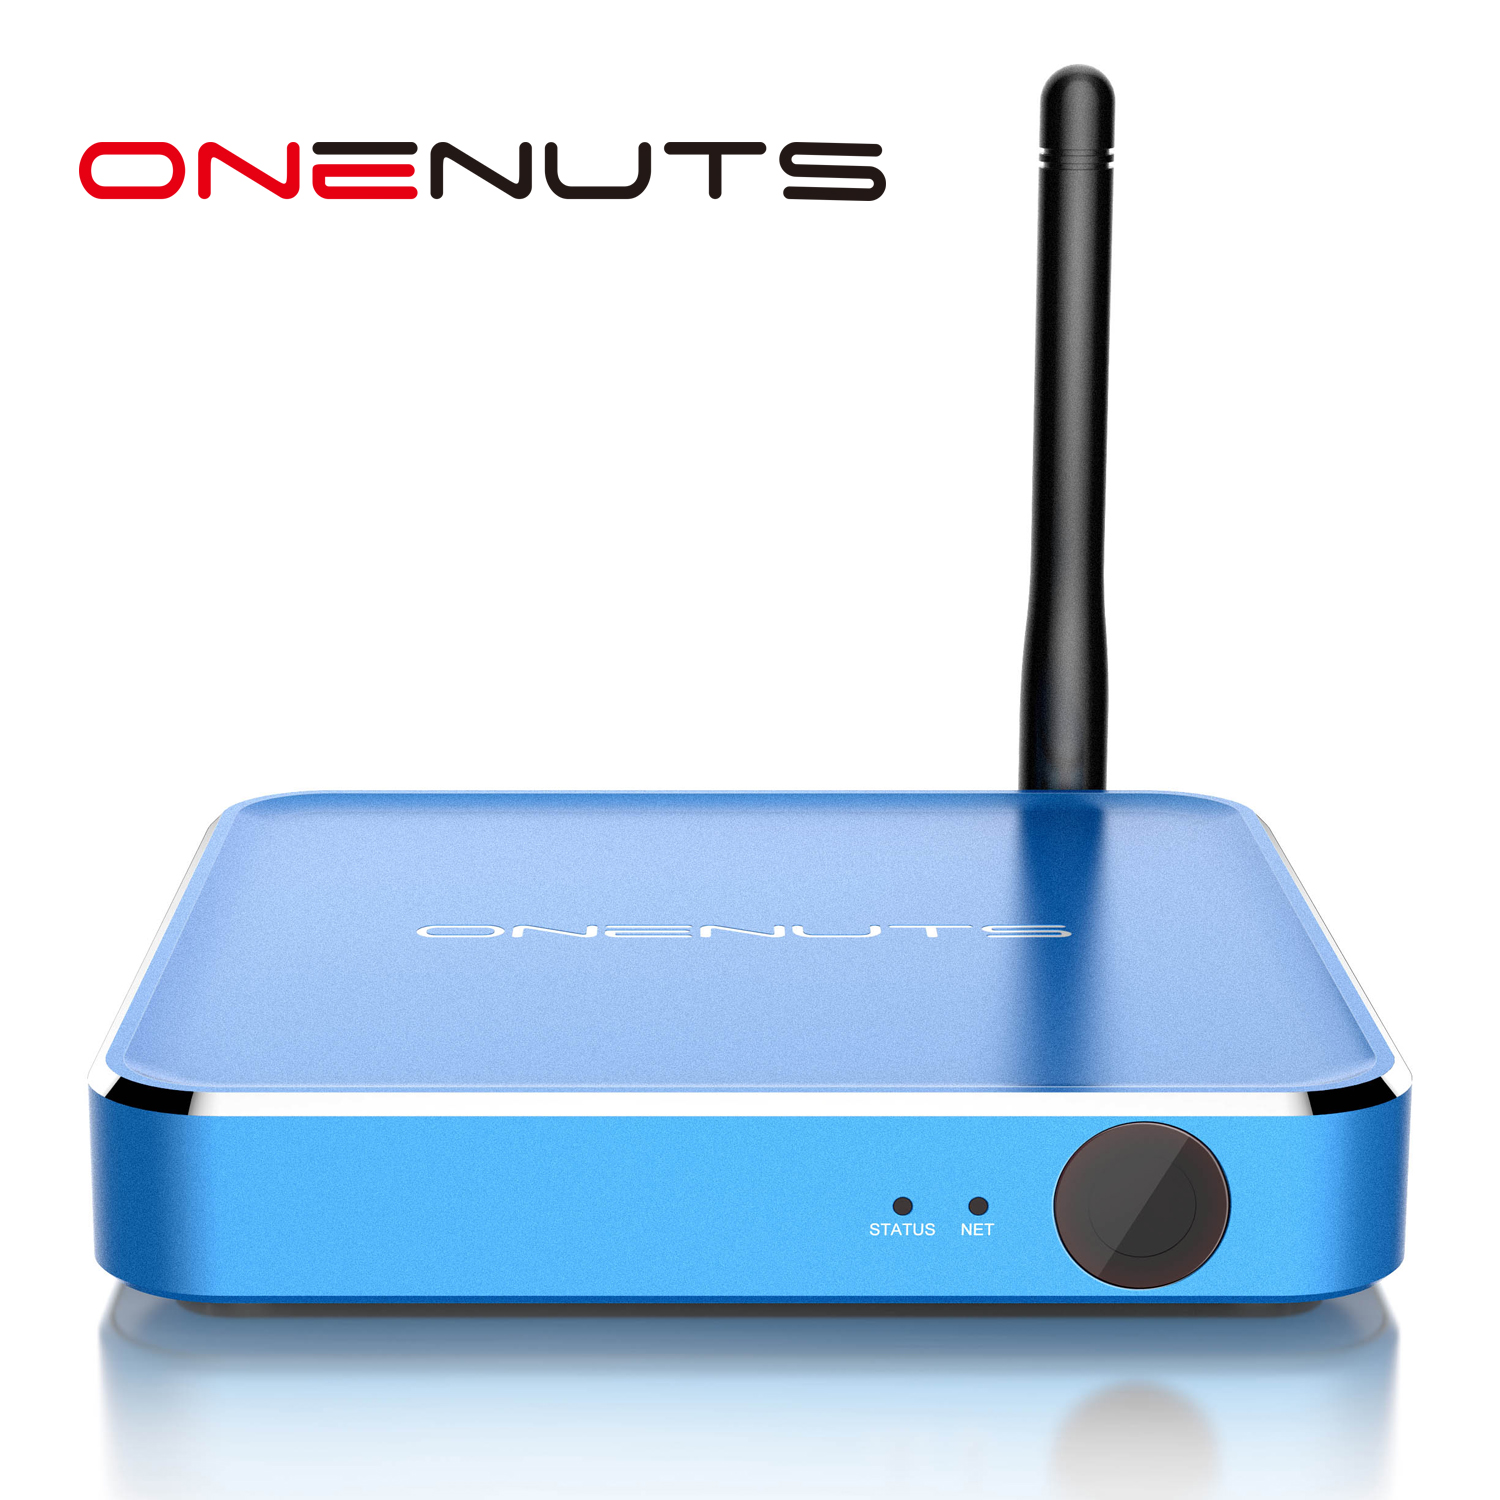 2-em-1 Octa Core Streaming Media Player e jogo Android TV Box com Android 6.0 Marshmallow 2G DDR3 16G eMMC Dual-Band AC Wi-Fi apoio KODI YouTube Netflix Facebook e muitos mais - Onenuts Nut 1 Blue